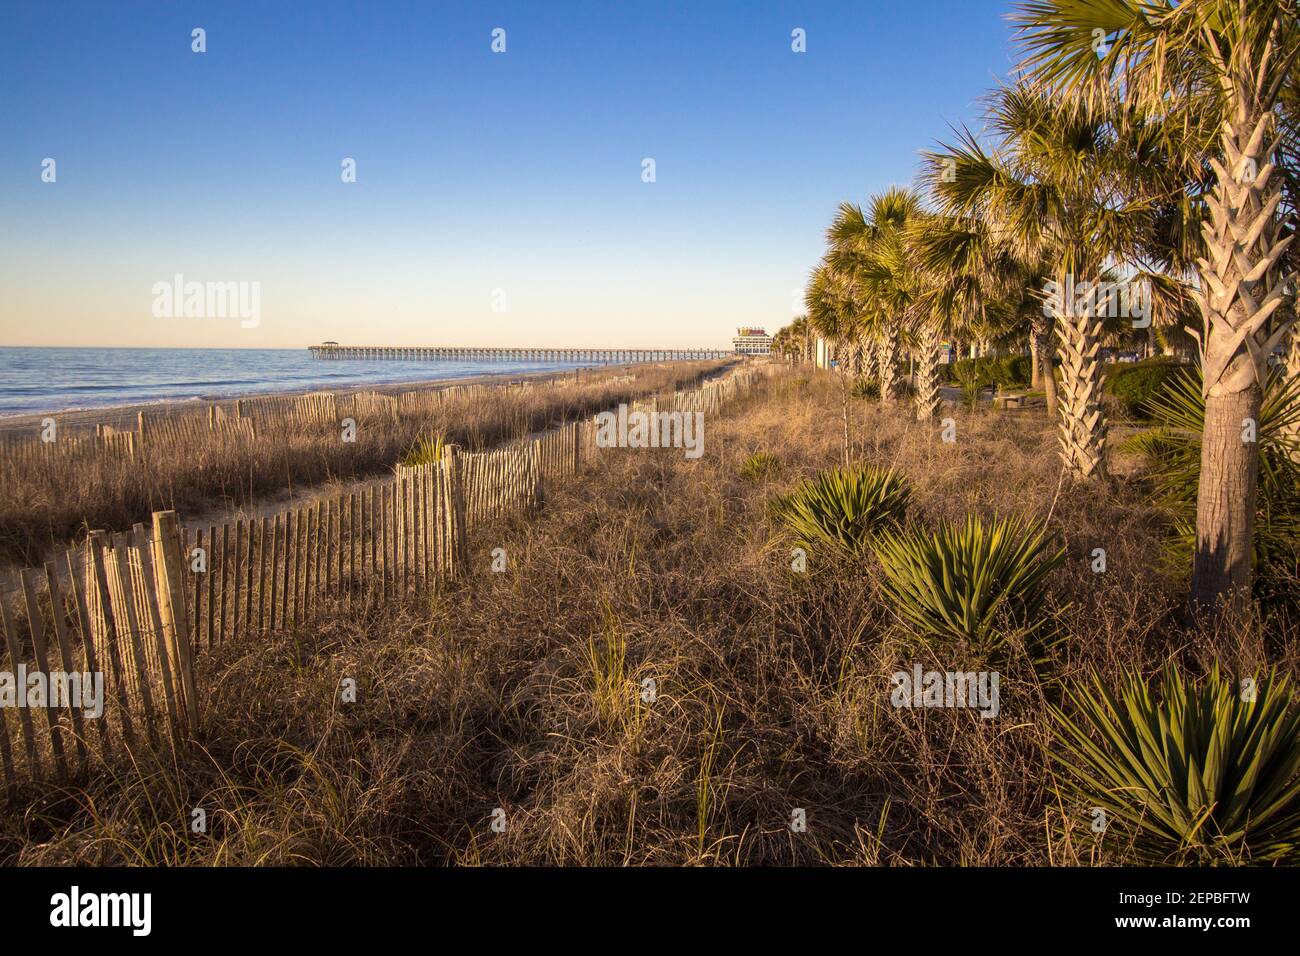 The Myrtle Beach Coast. Palmetto trees and sea oats along the boardwalk of Myrtle Beach, South Carolina on the Atlantic coast. Stock Photo